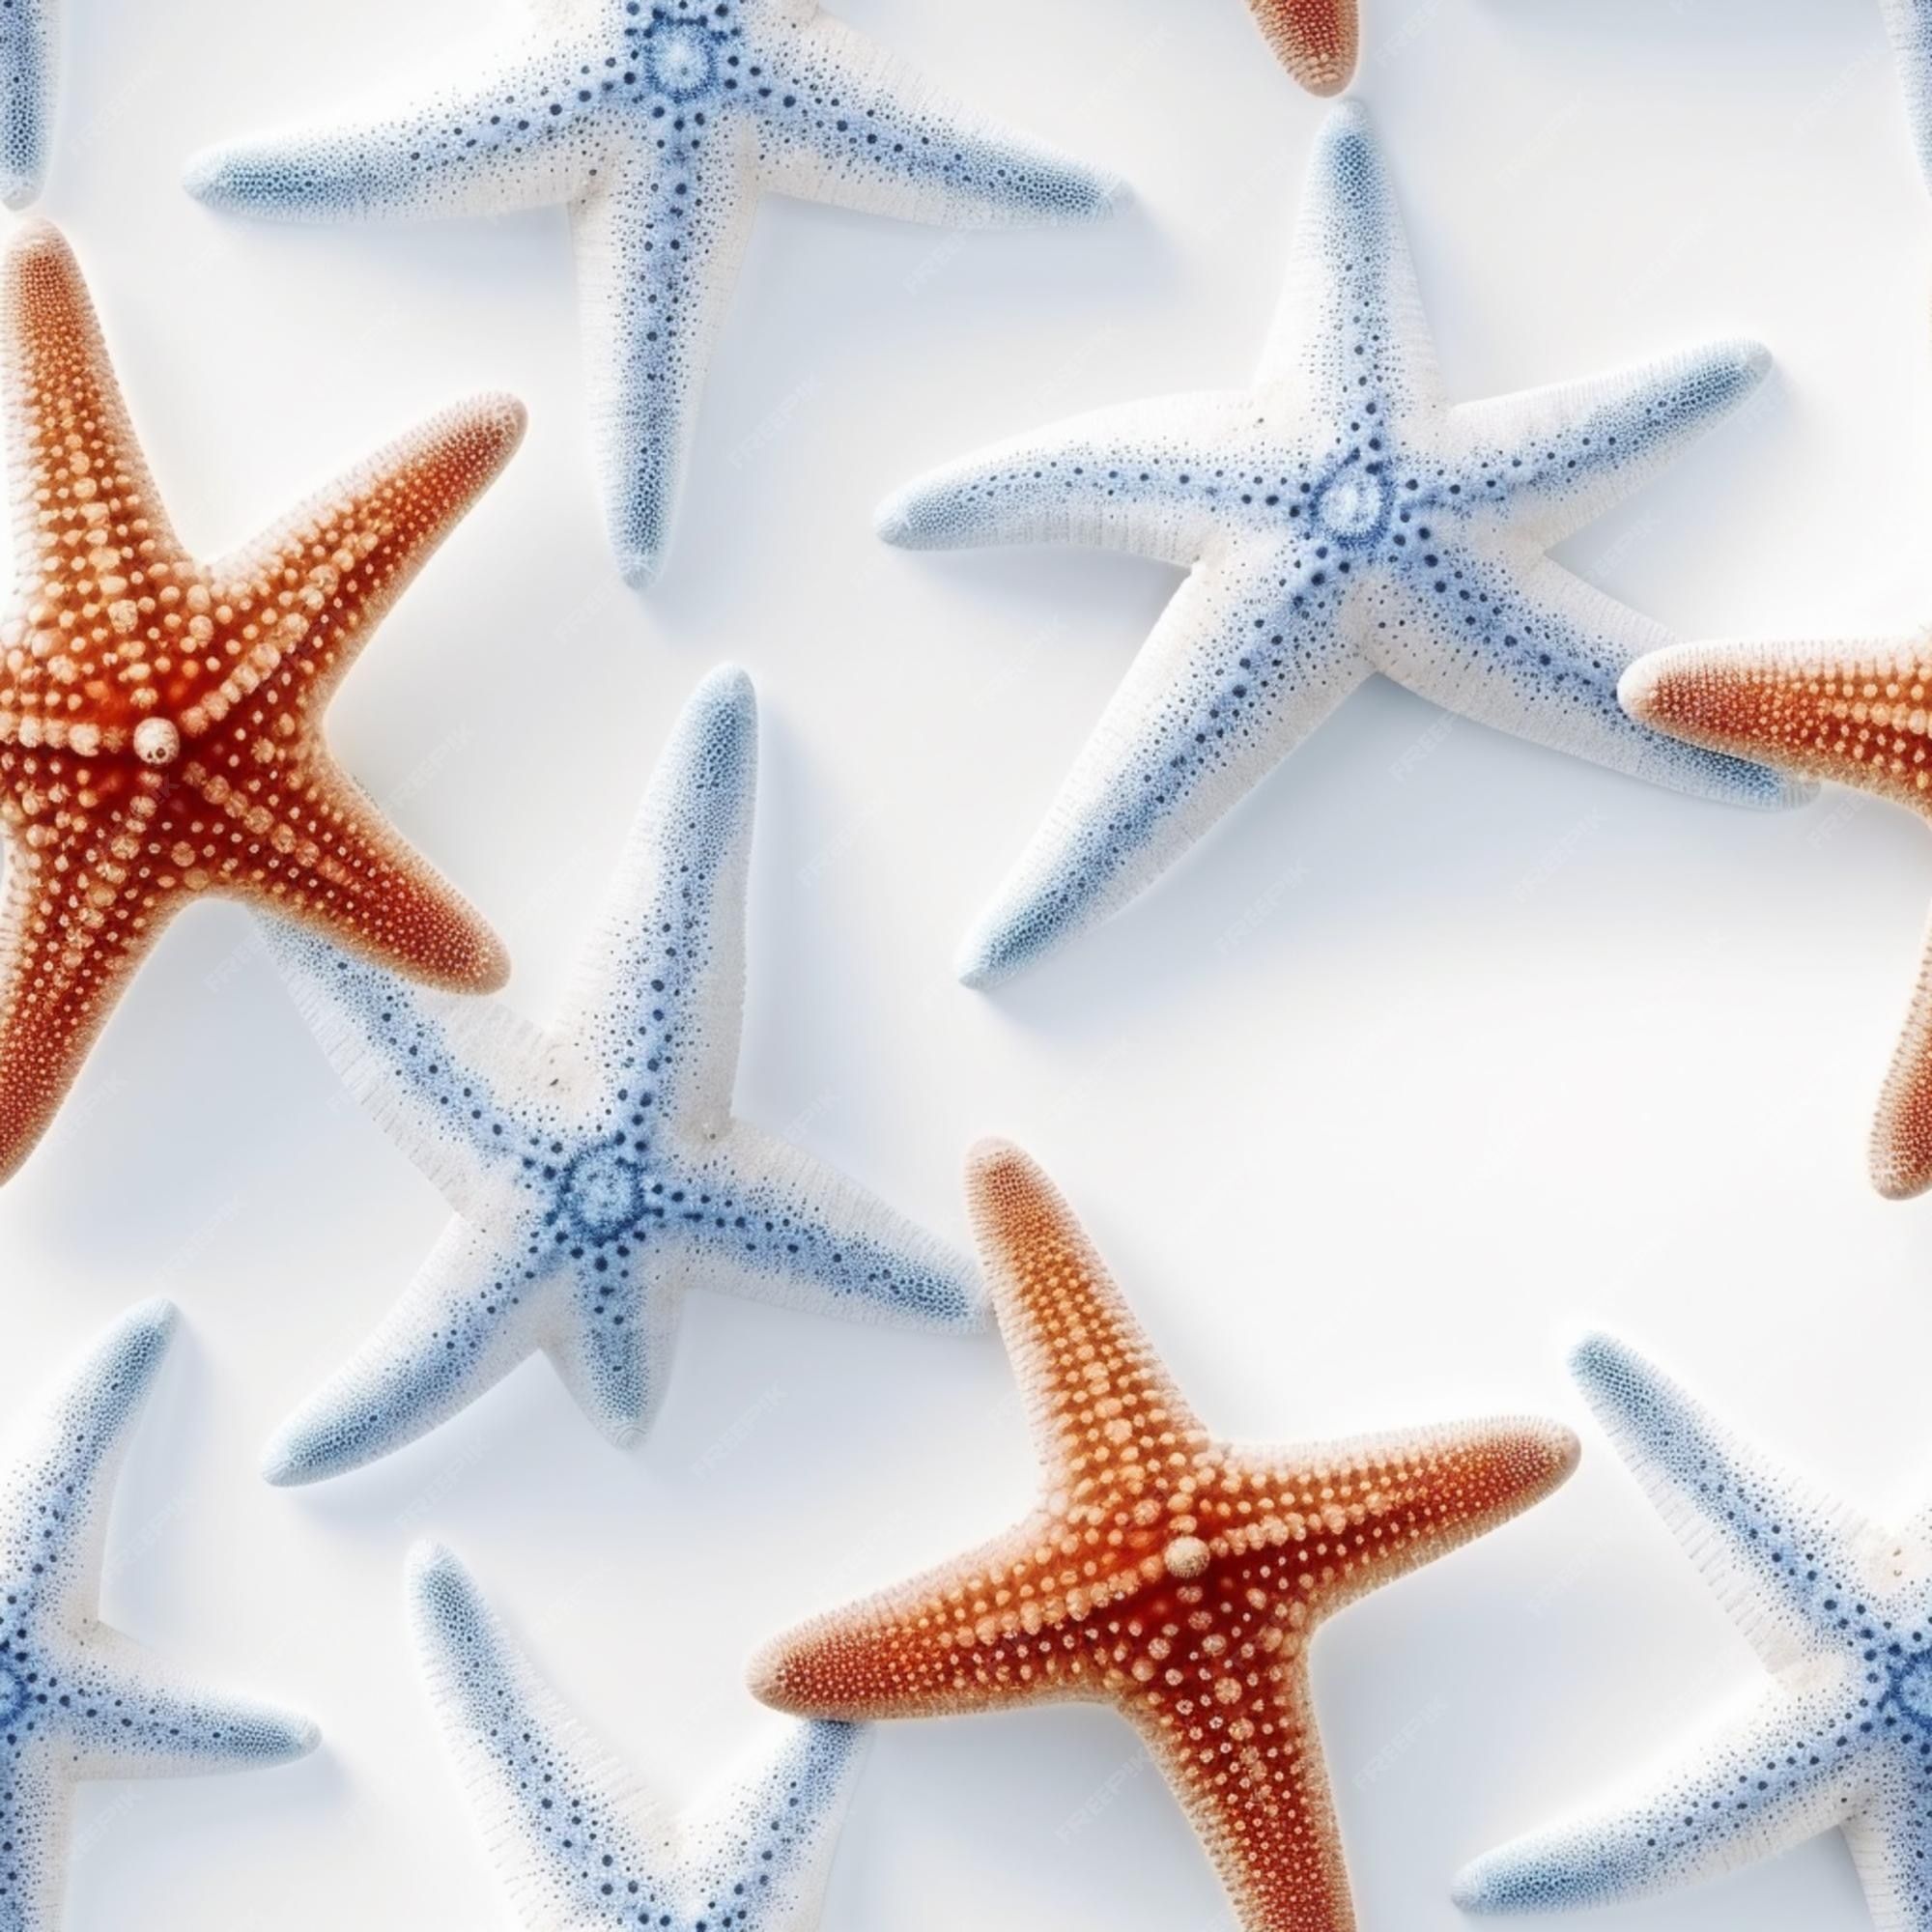 Starfish wallpaper on a white background - Starfish